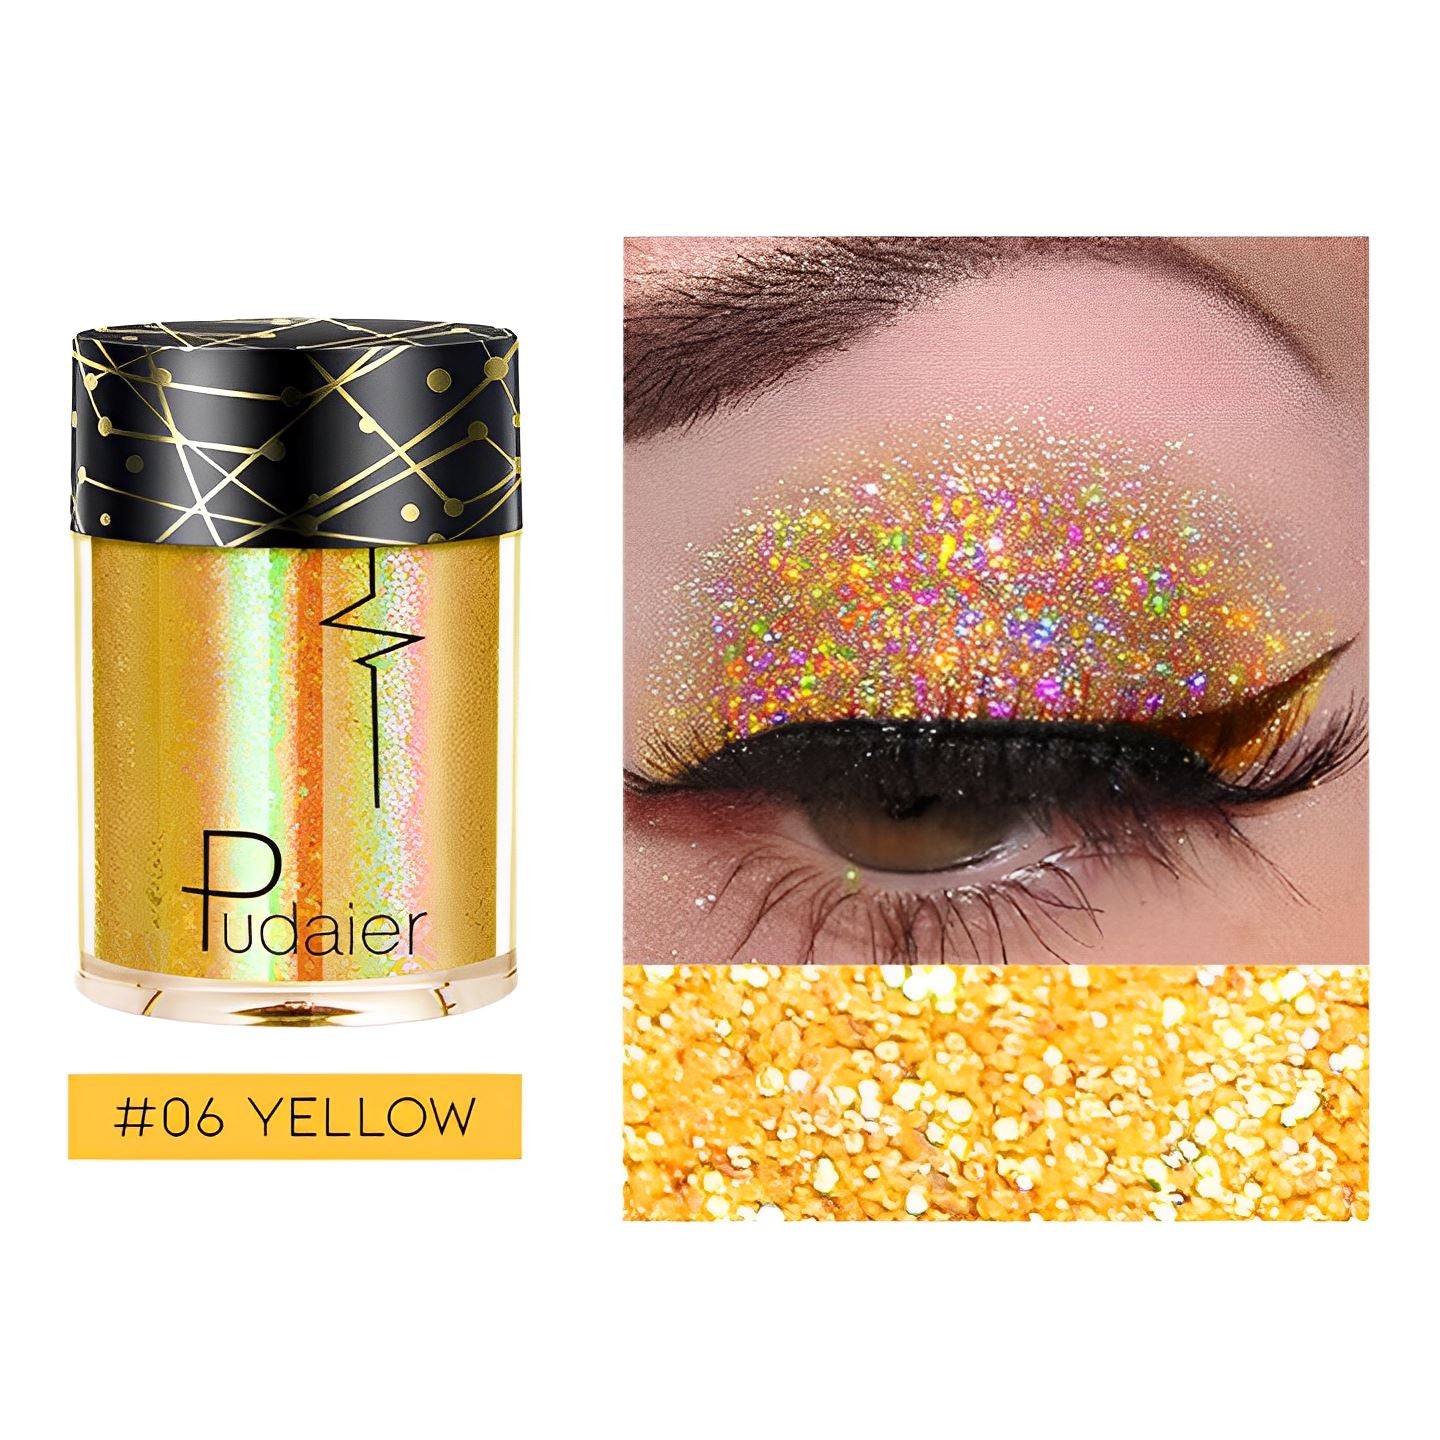 Single Shade High Shine Glitter Make-up Every Day And Night #06 Yellow 